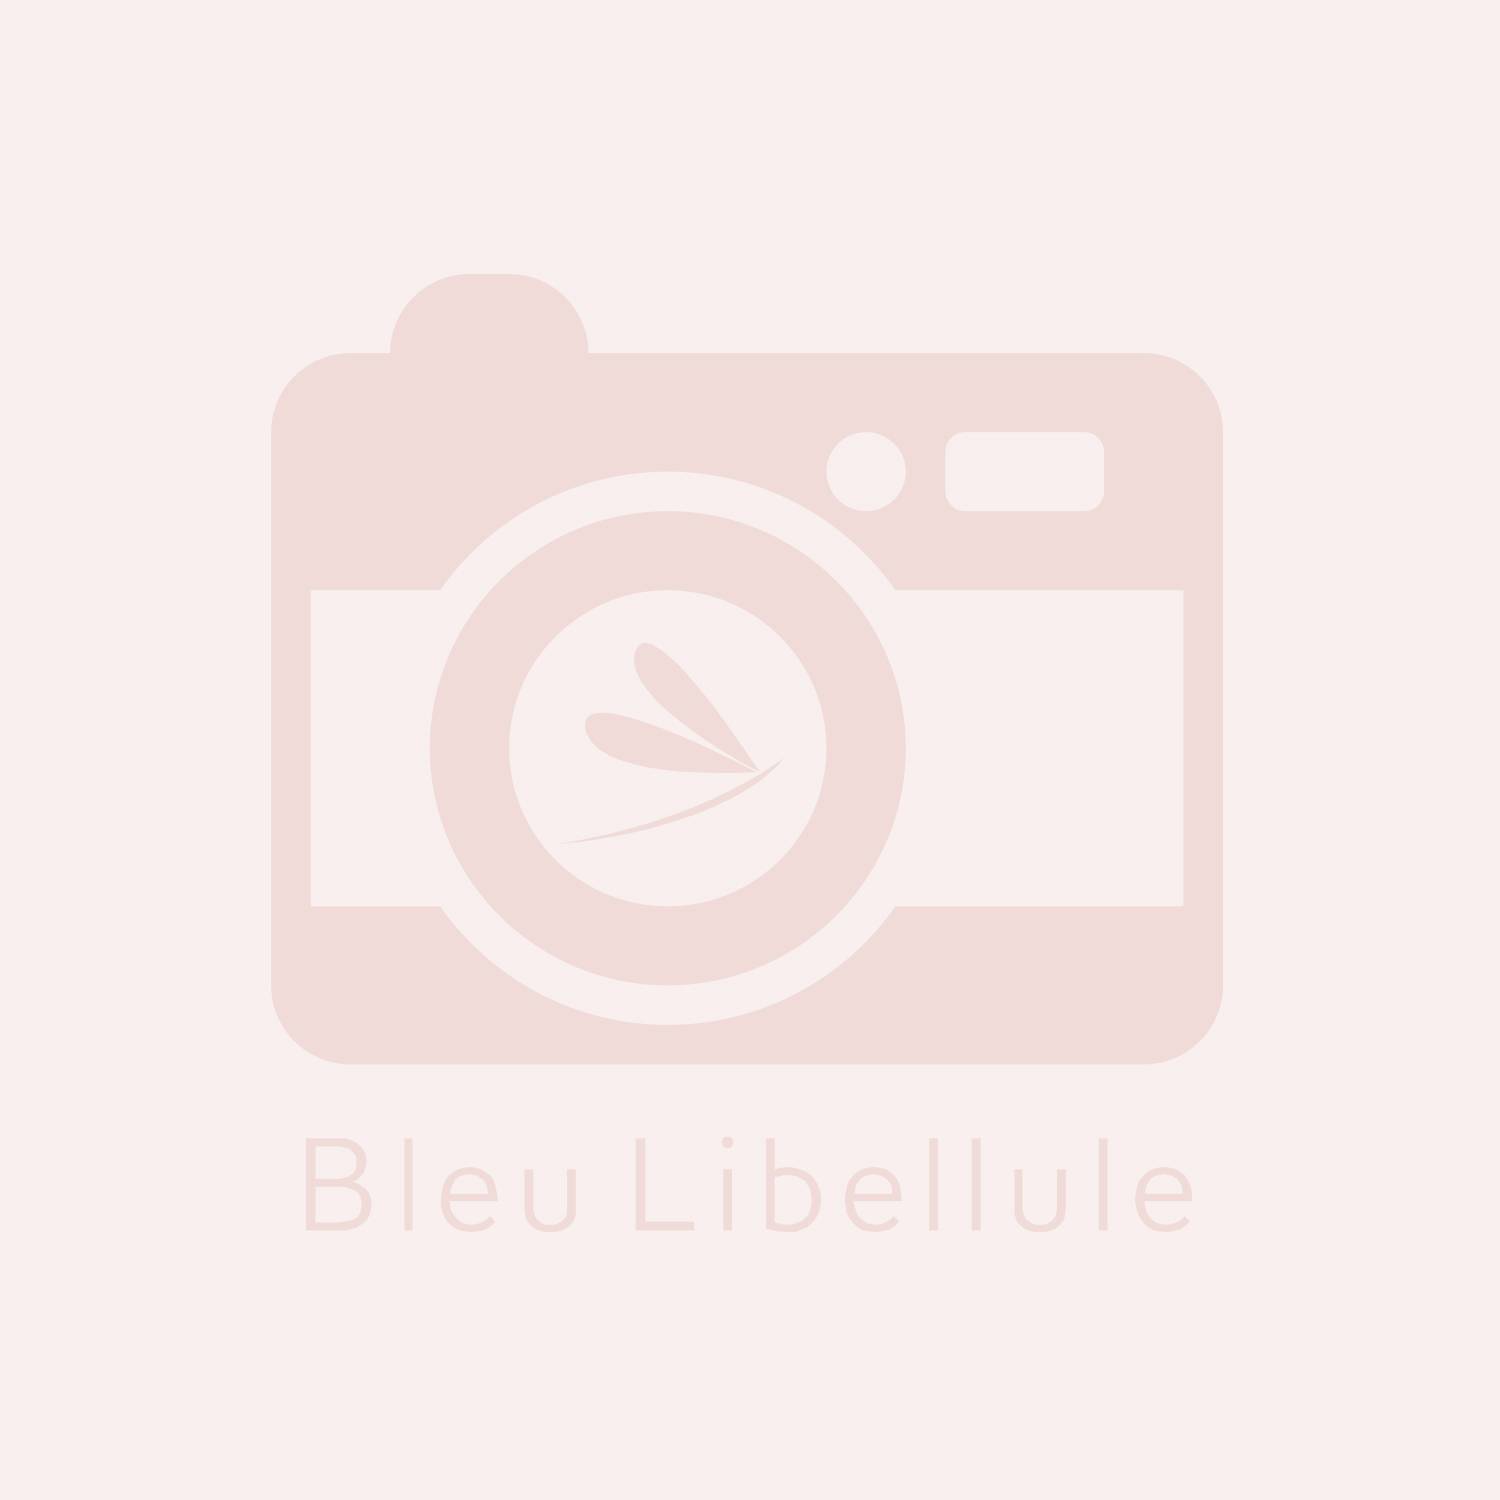 Bleu Libellule Eau de parfum Irresistible spray 15ml, Femme